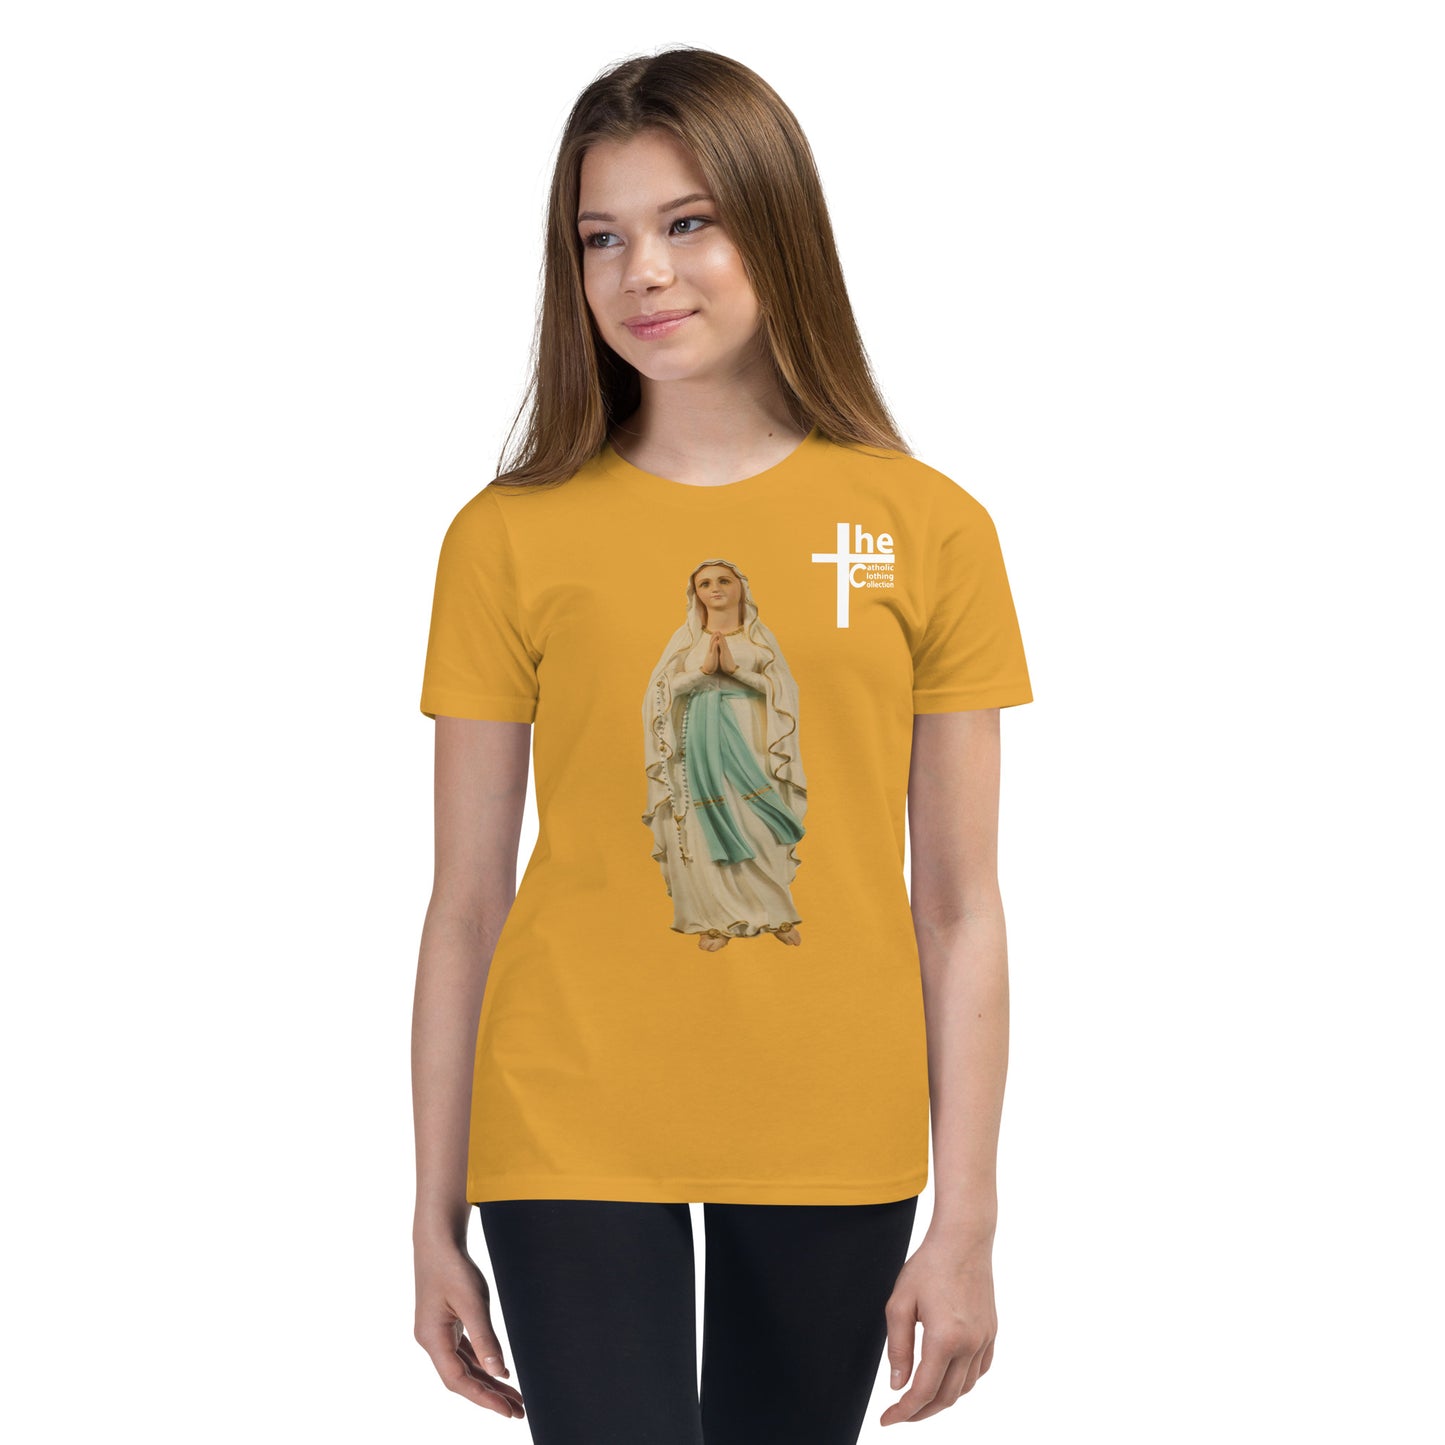 Our Lady of Lourdes Children's t-Shirt